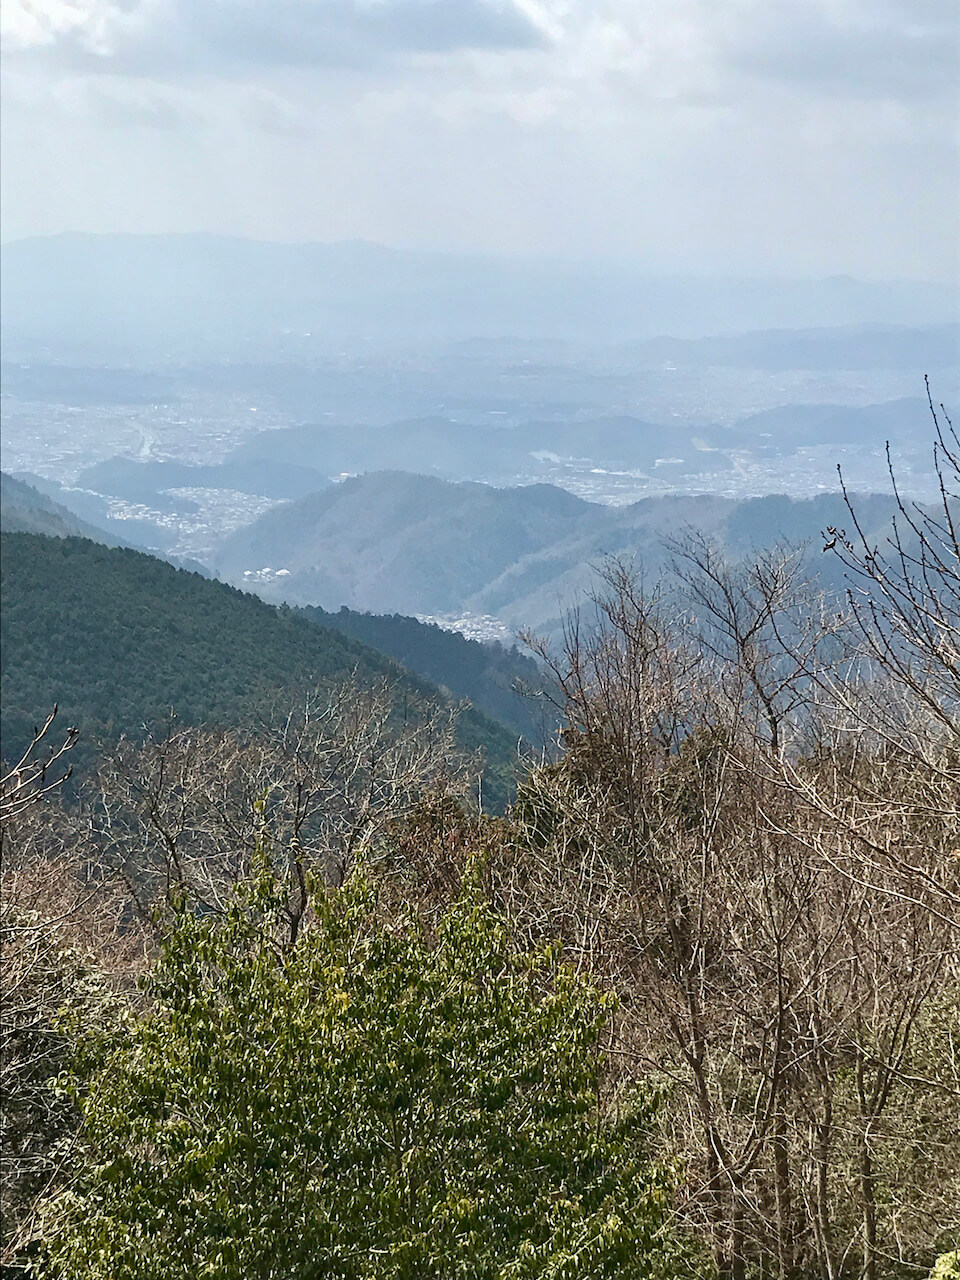 View from Mount Hiei, Shiga